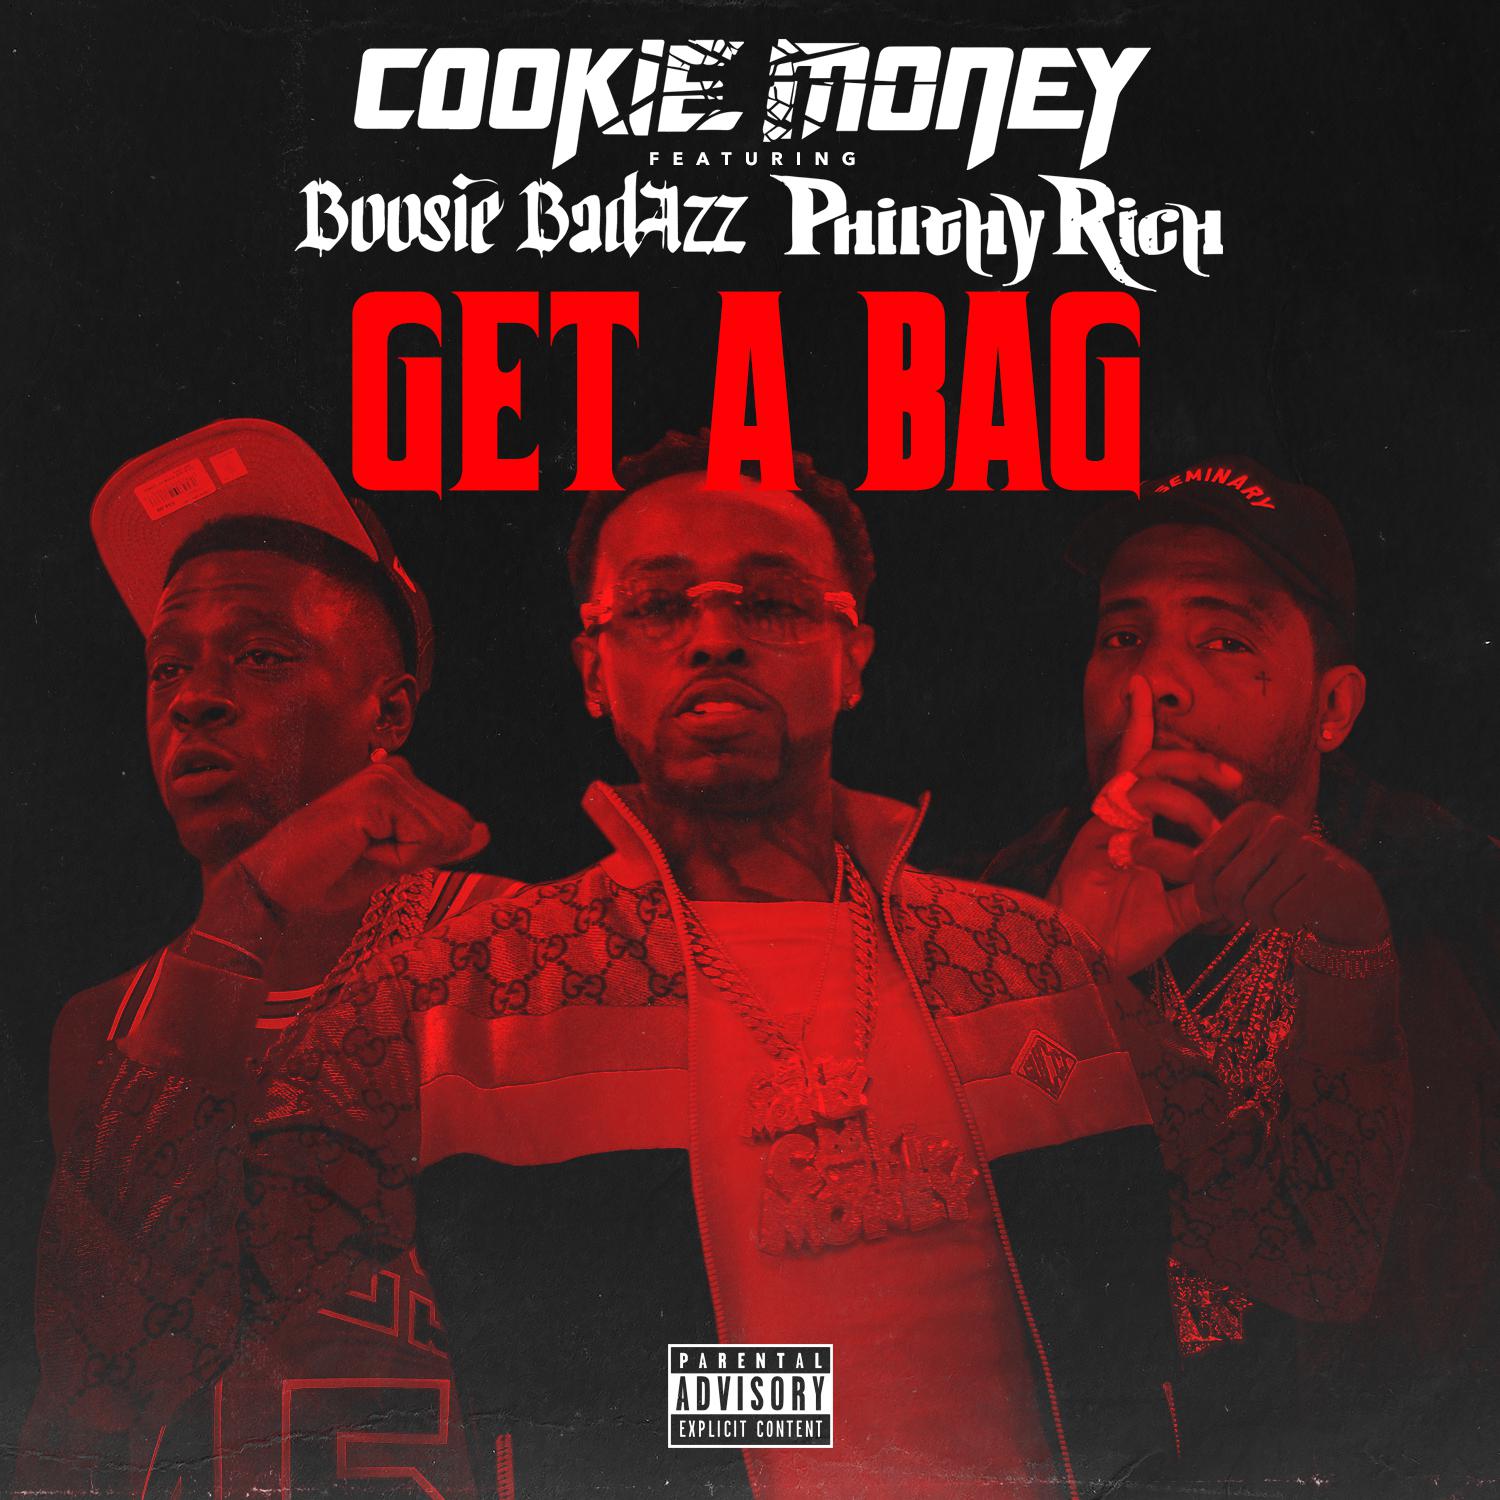 Get A Bag (feat. Boosie Badazz & Philthy Rich)